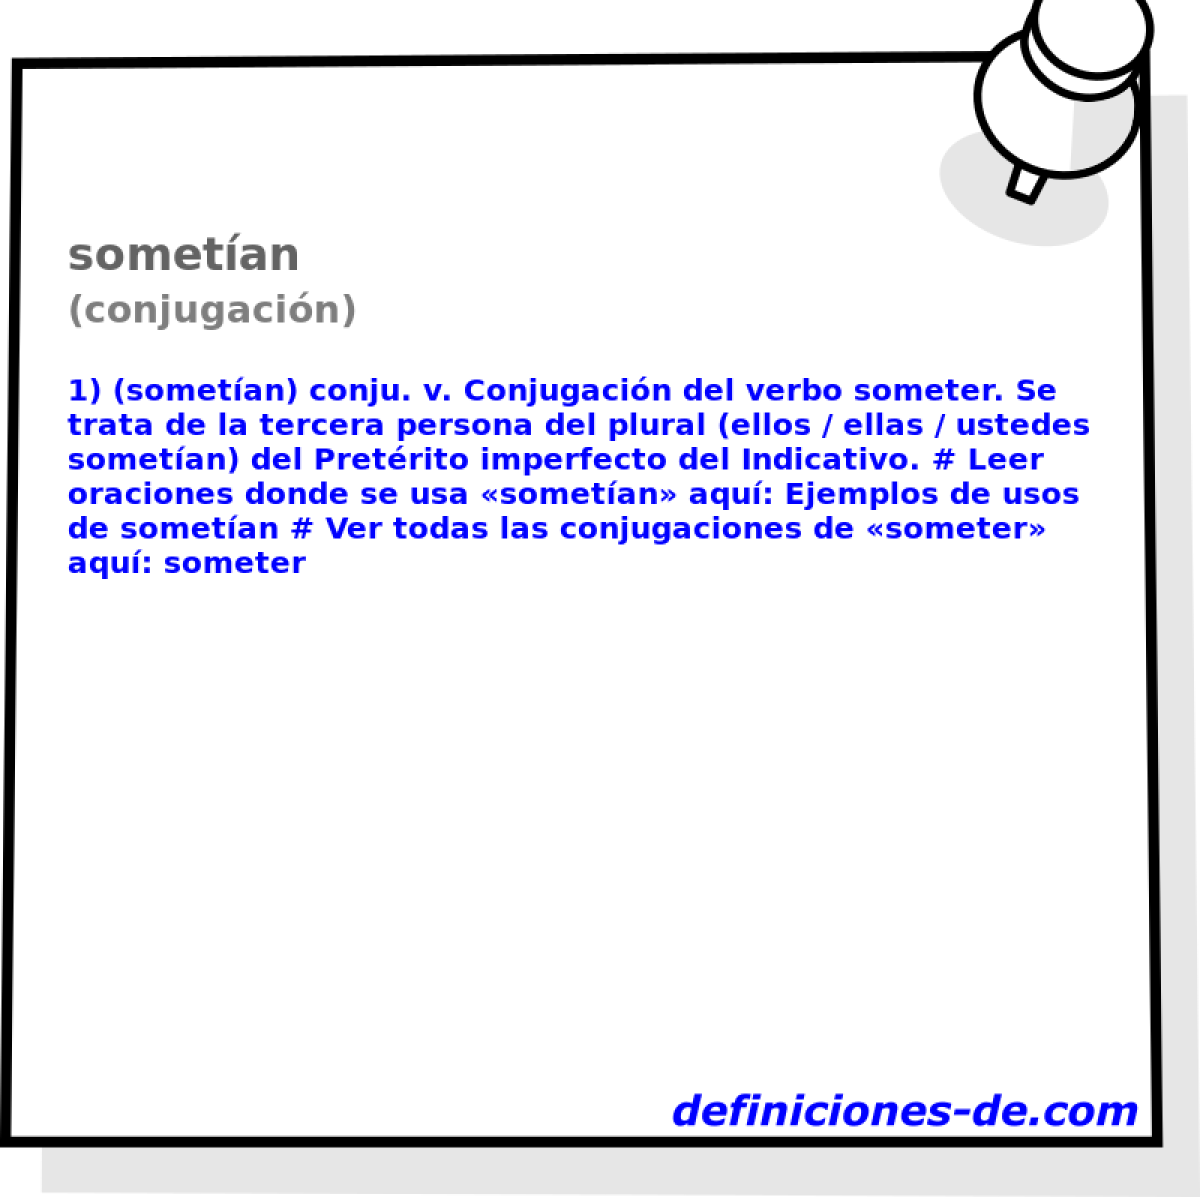 sometan (conjugacin)